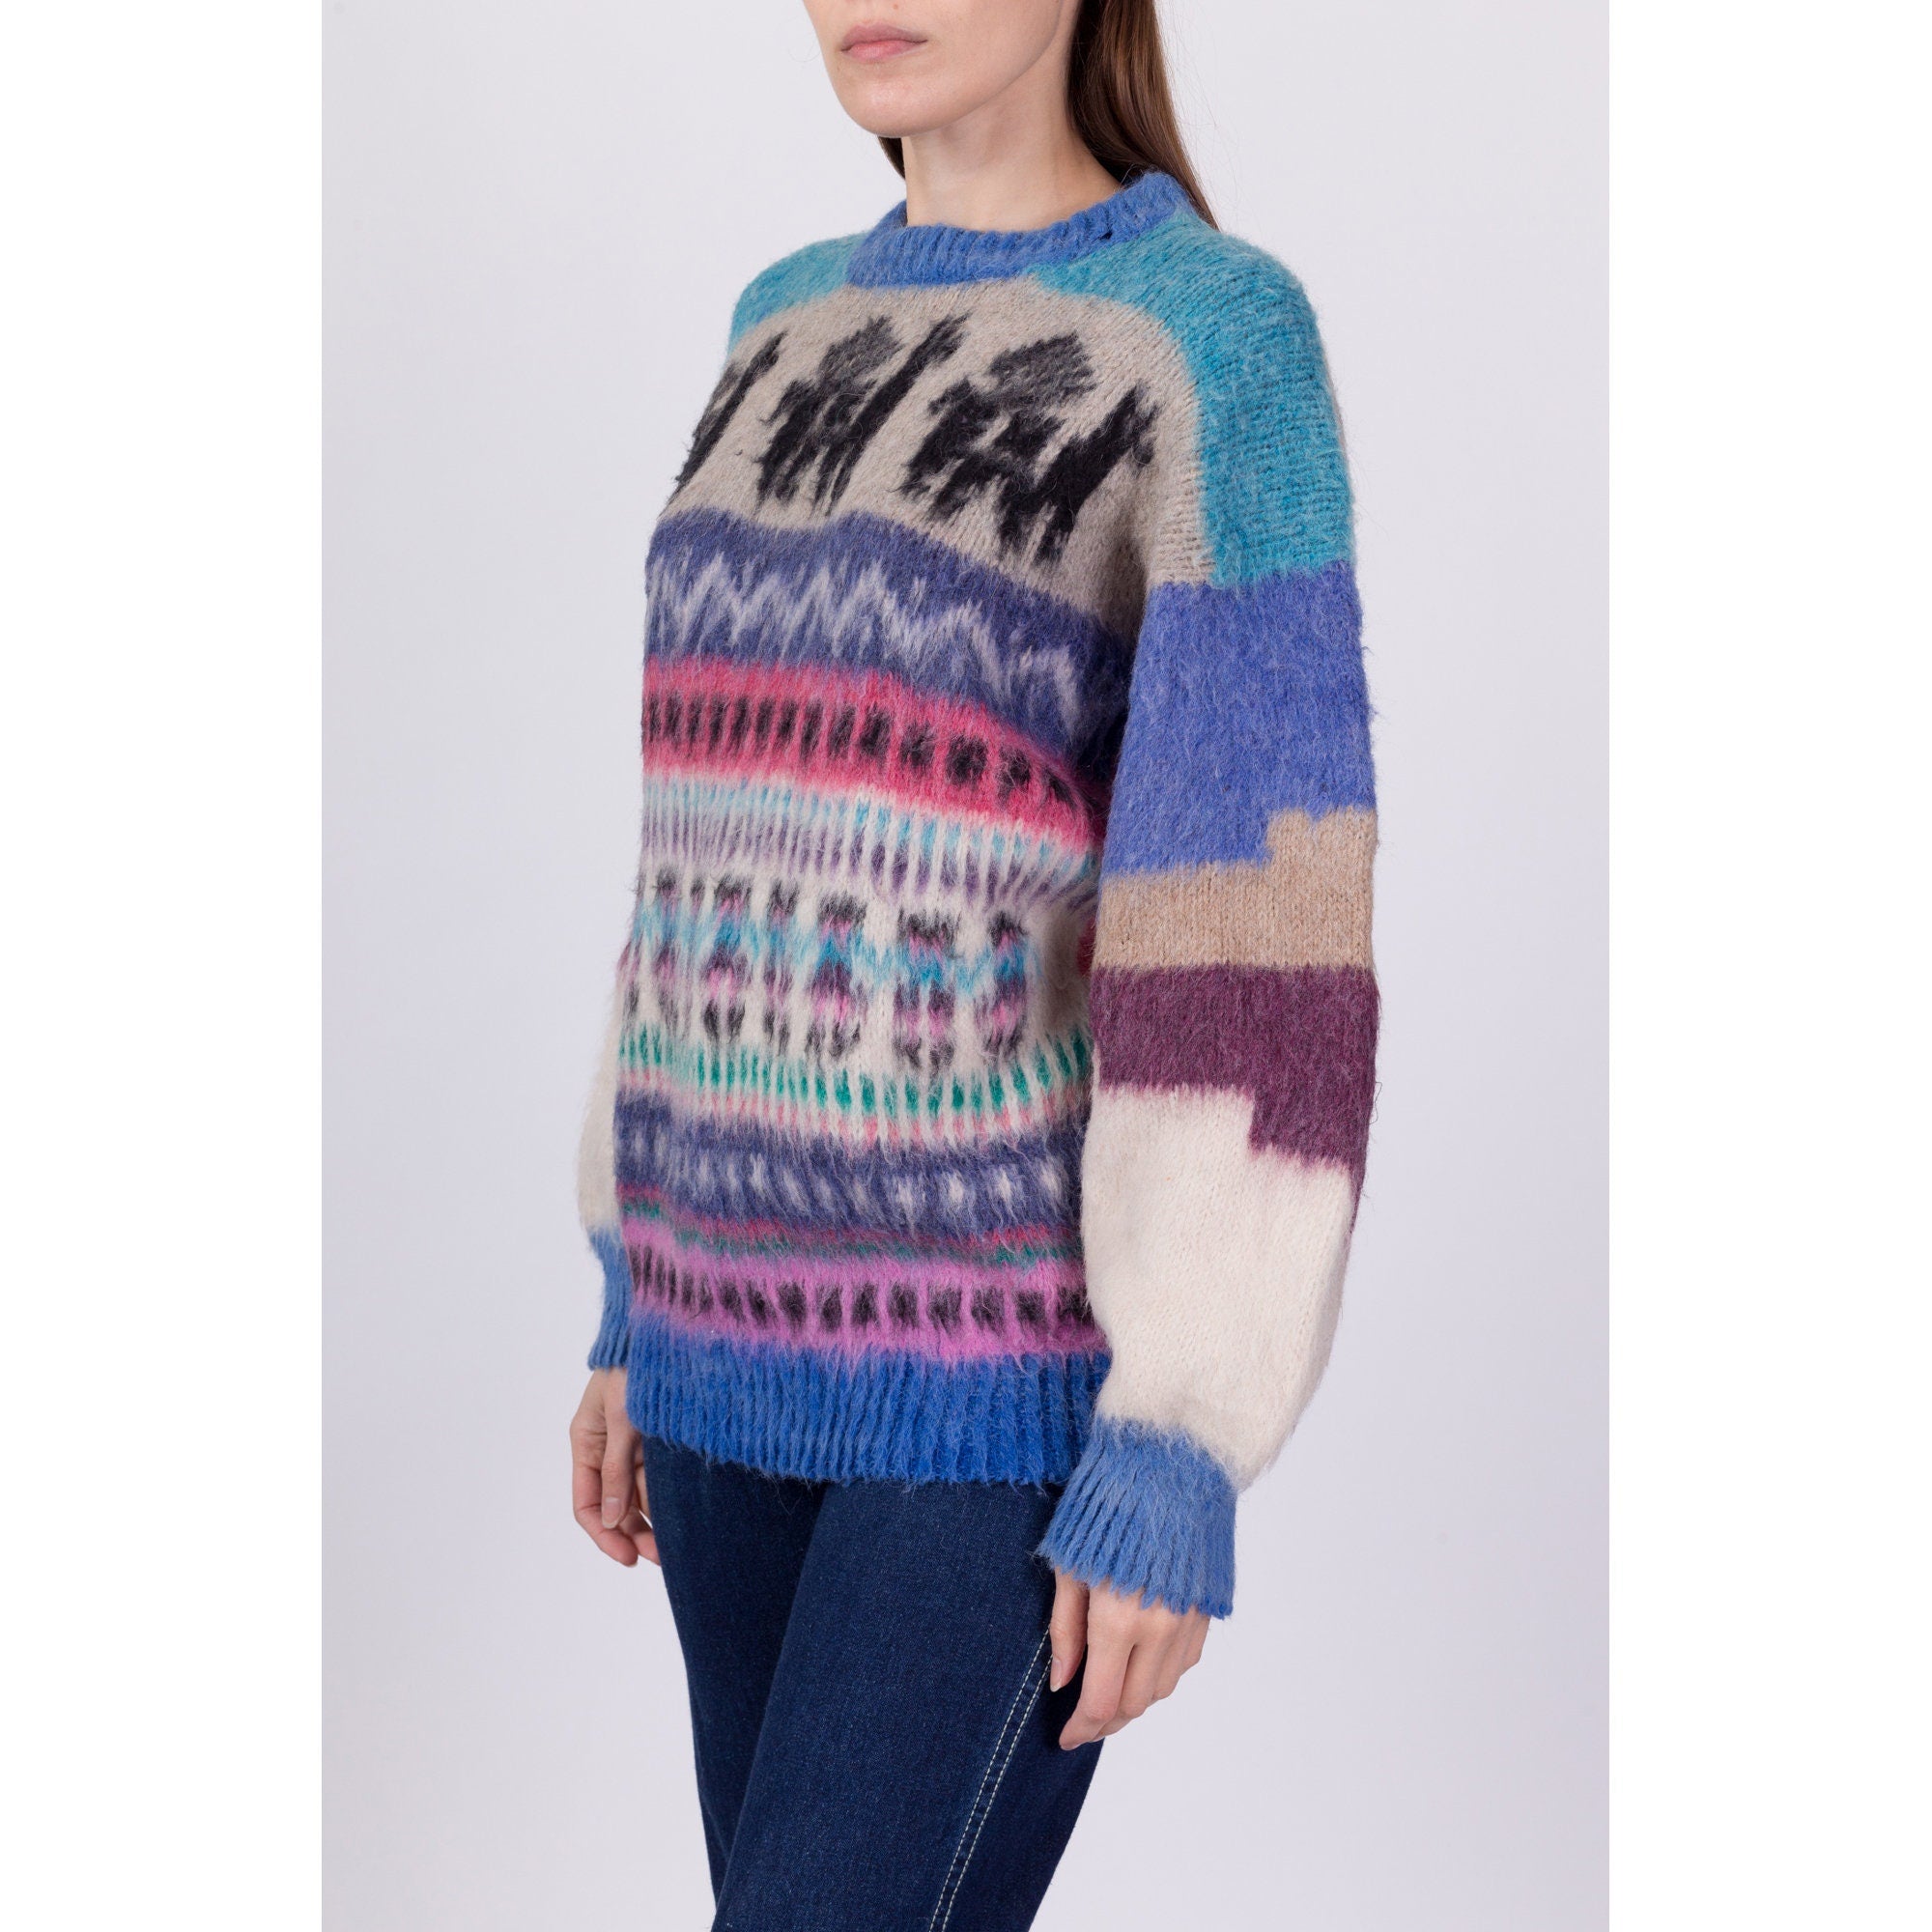 Vintage Alpaca Shaggy Knit Sweater - Men's Medium, Women's Large